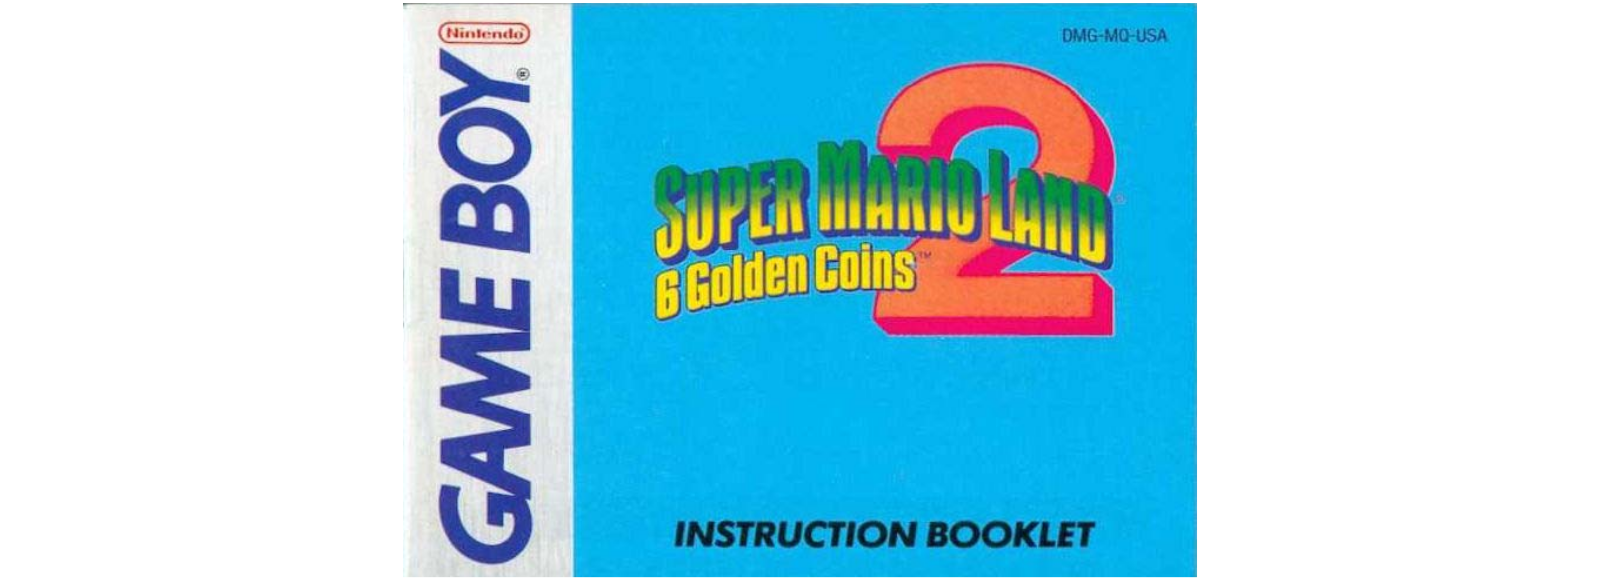 Nintendo SUPER MARIO LAND 2 instruction booklet